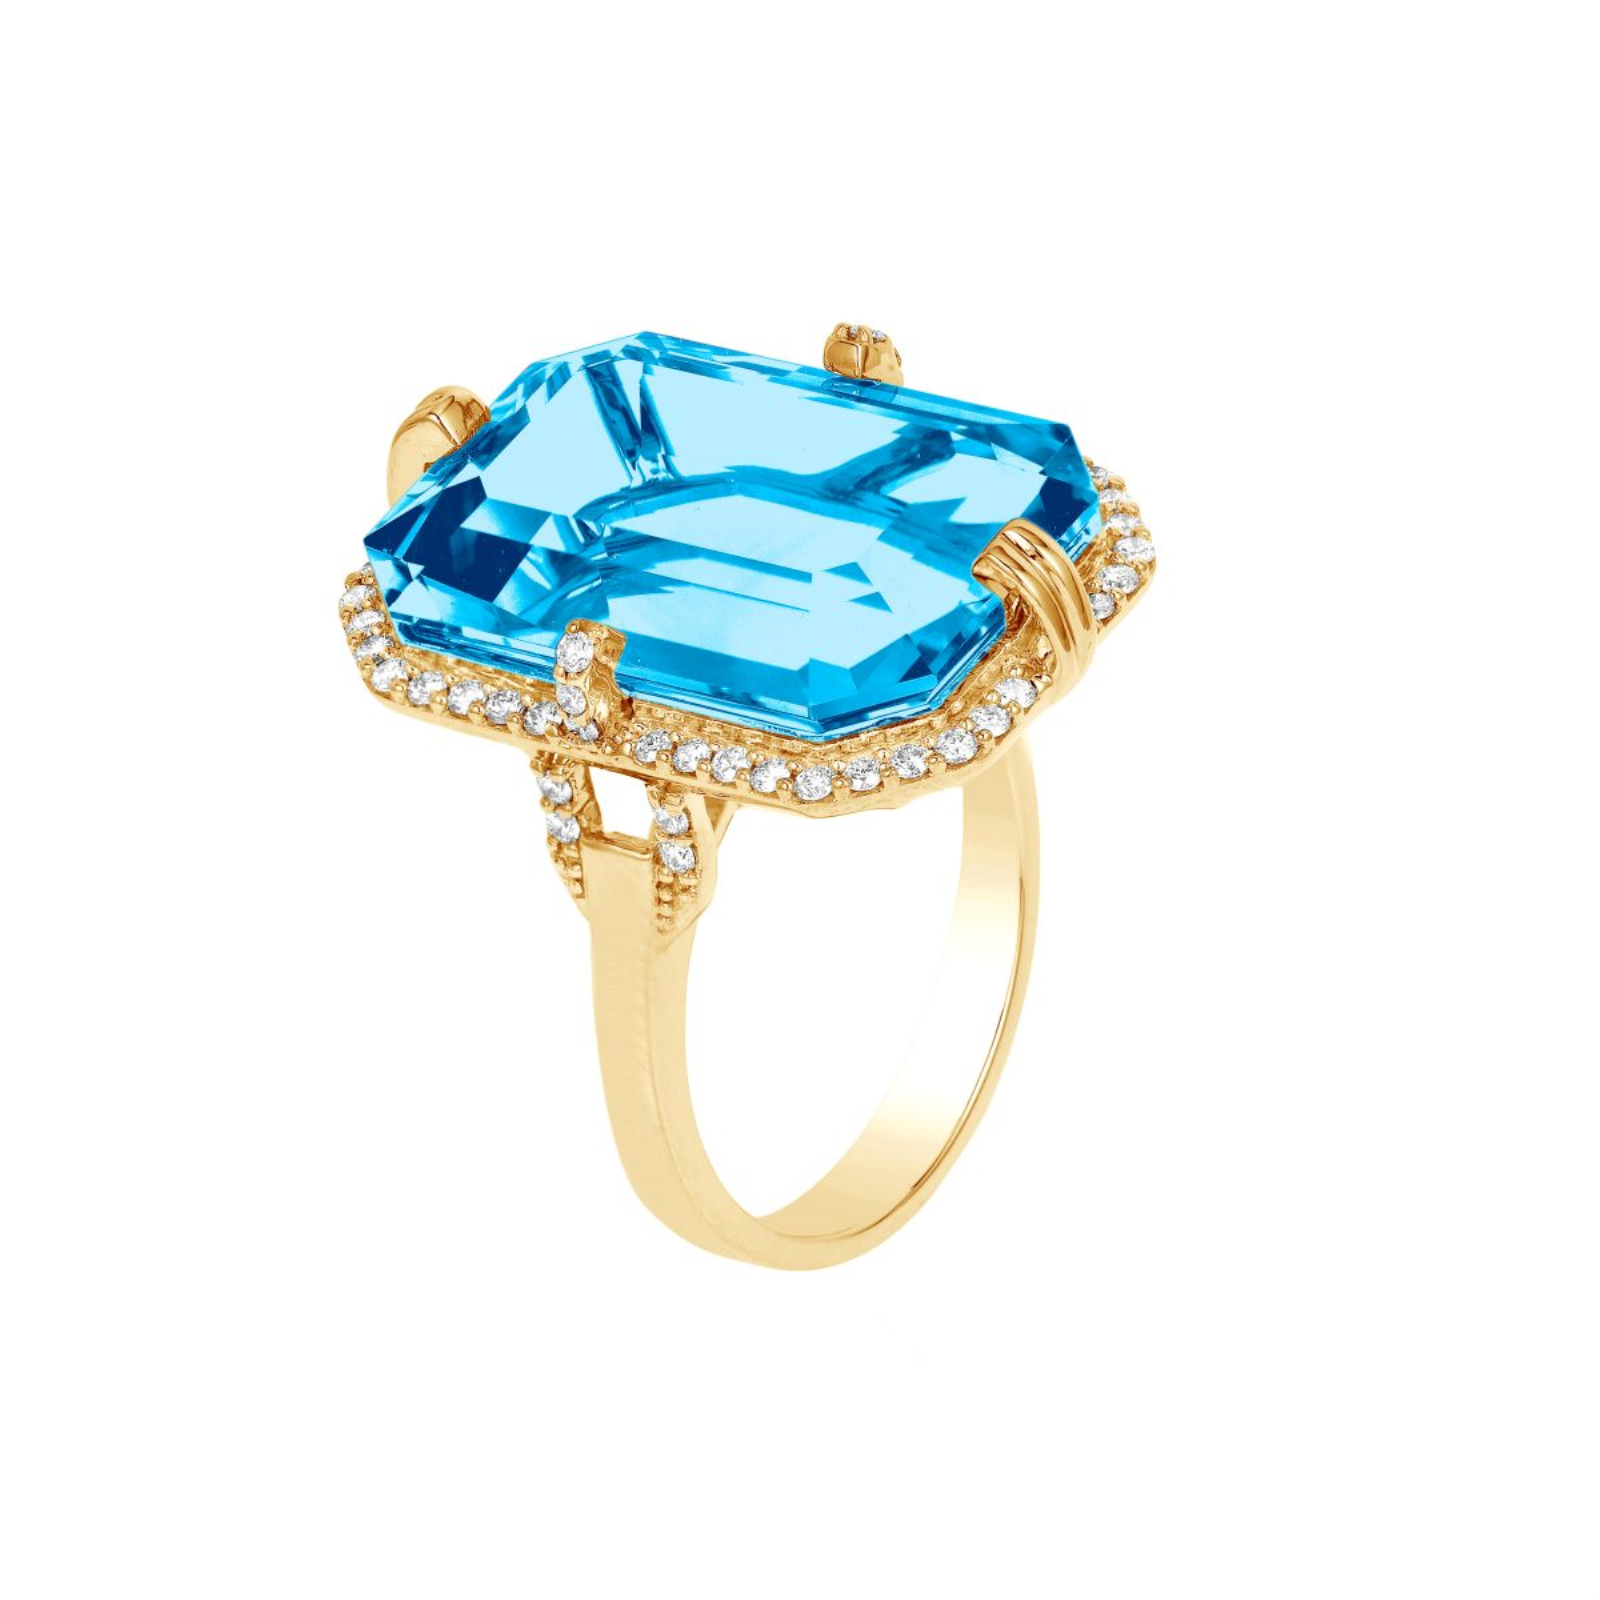 Blue Topaz Emerald Cut Ring with Diamonds